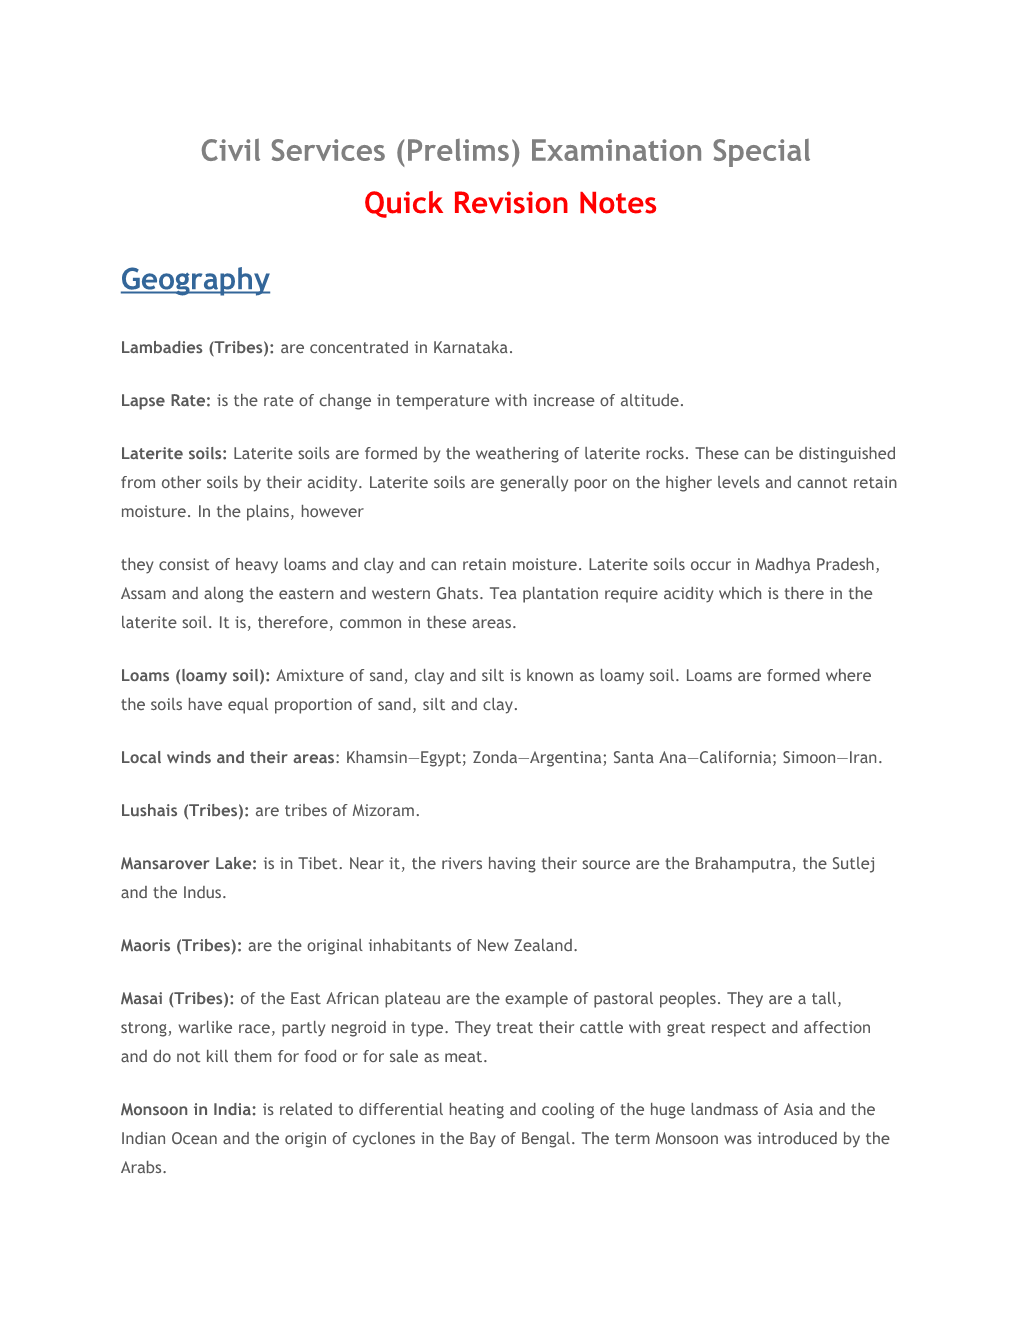 Civil Services (Prelims) Examination Special Quick Revision Notes